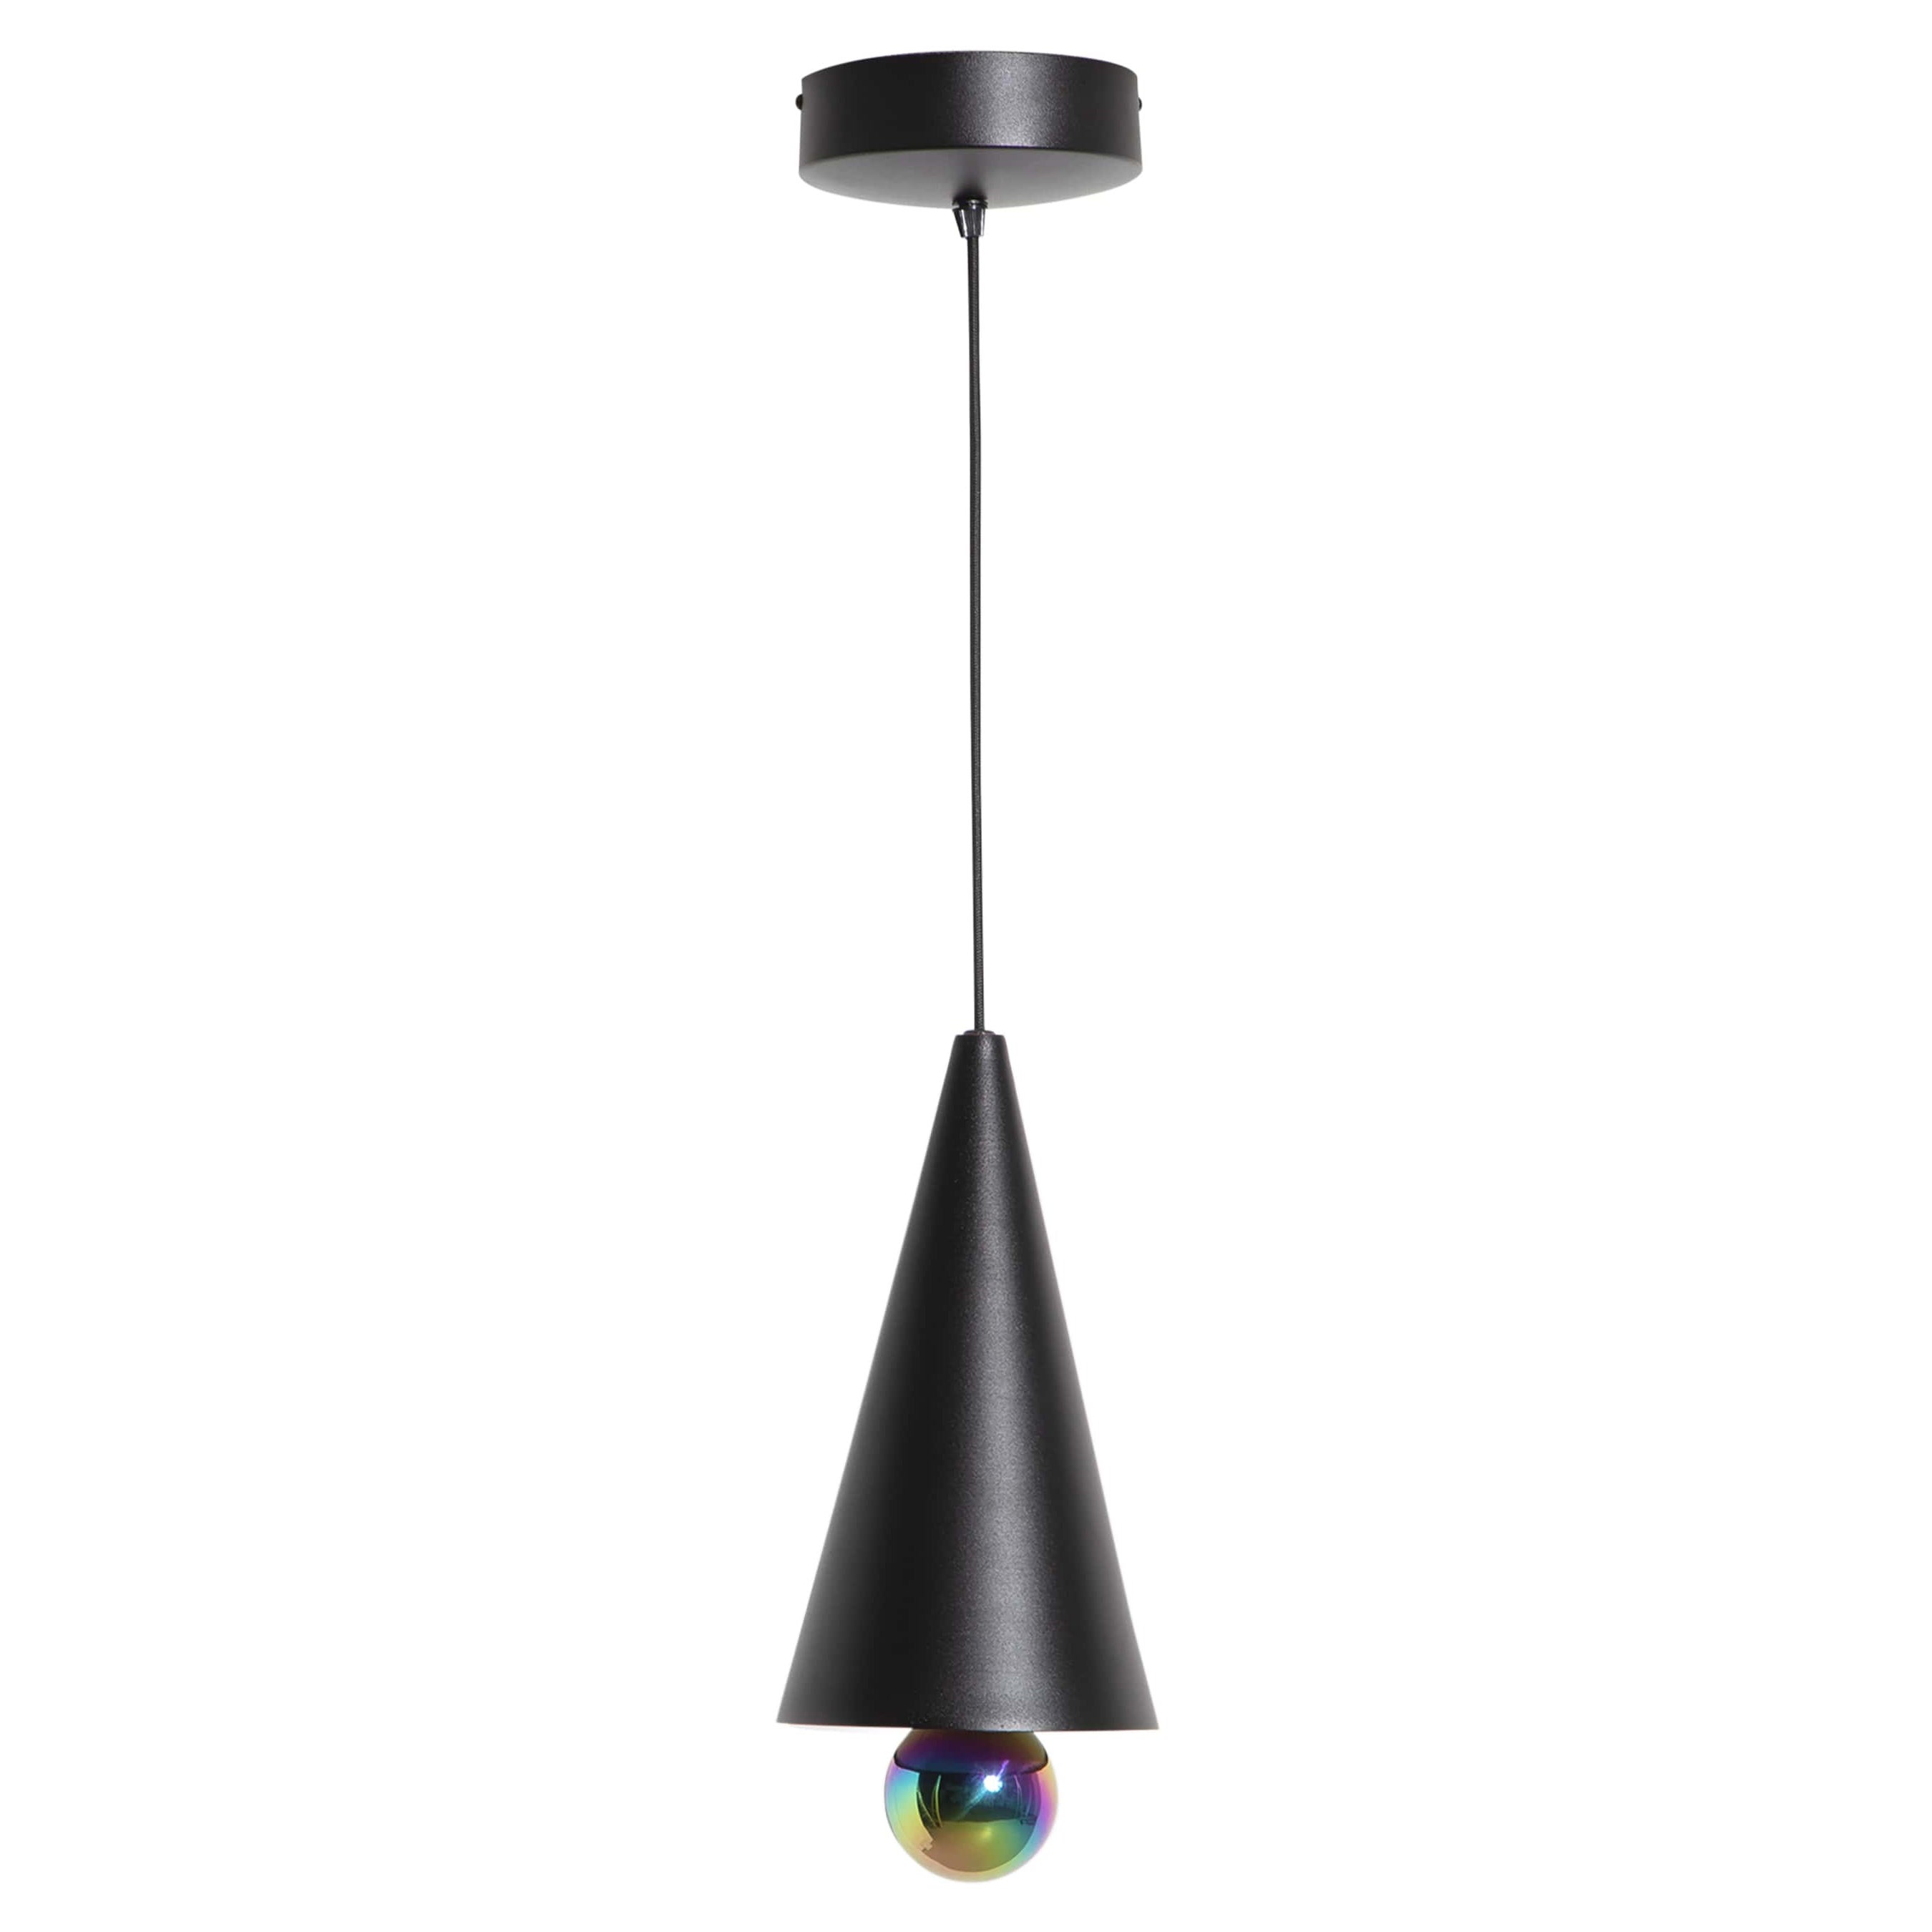 Petite Friture Small Cherry LED Pendant Light in Black and Rainbow Aluminium